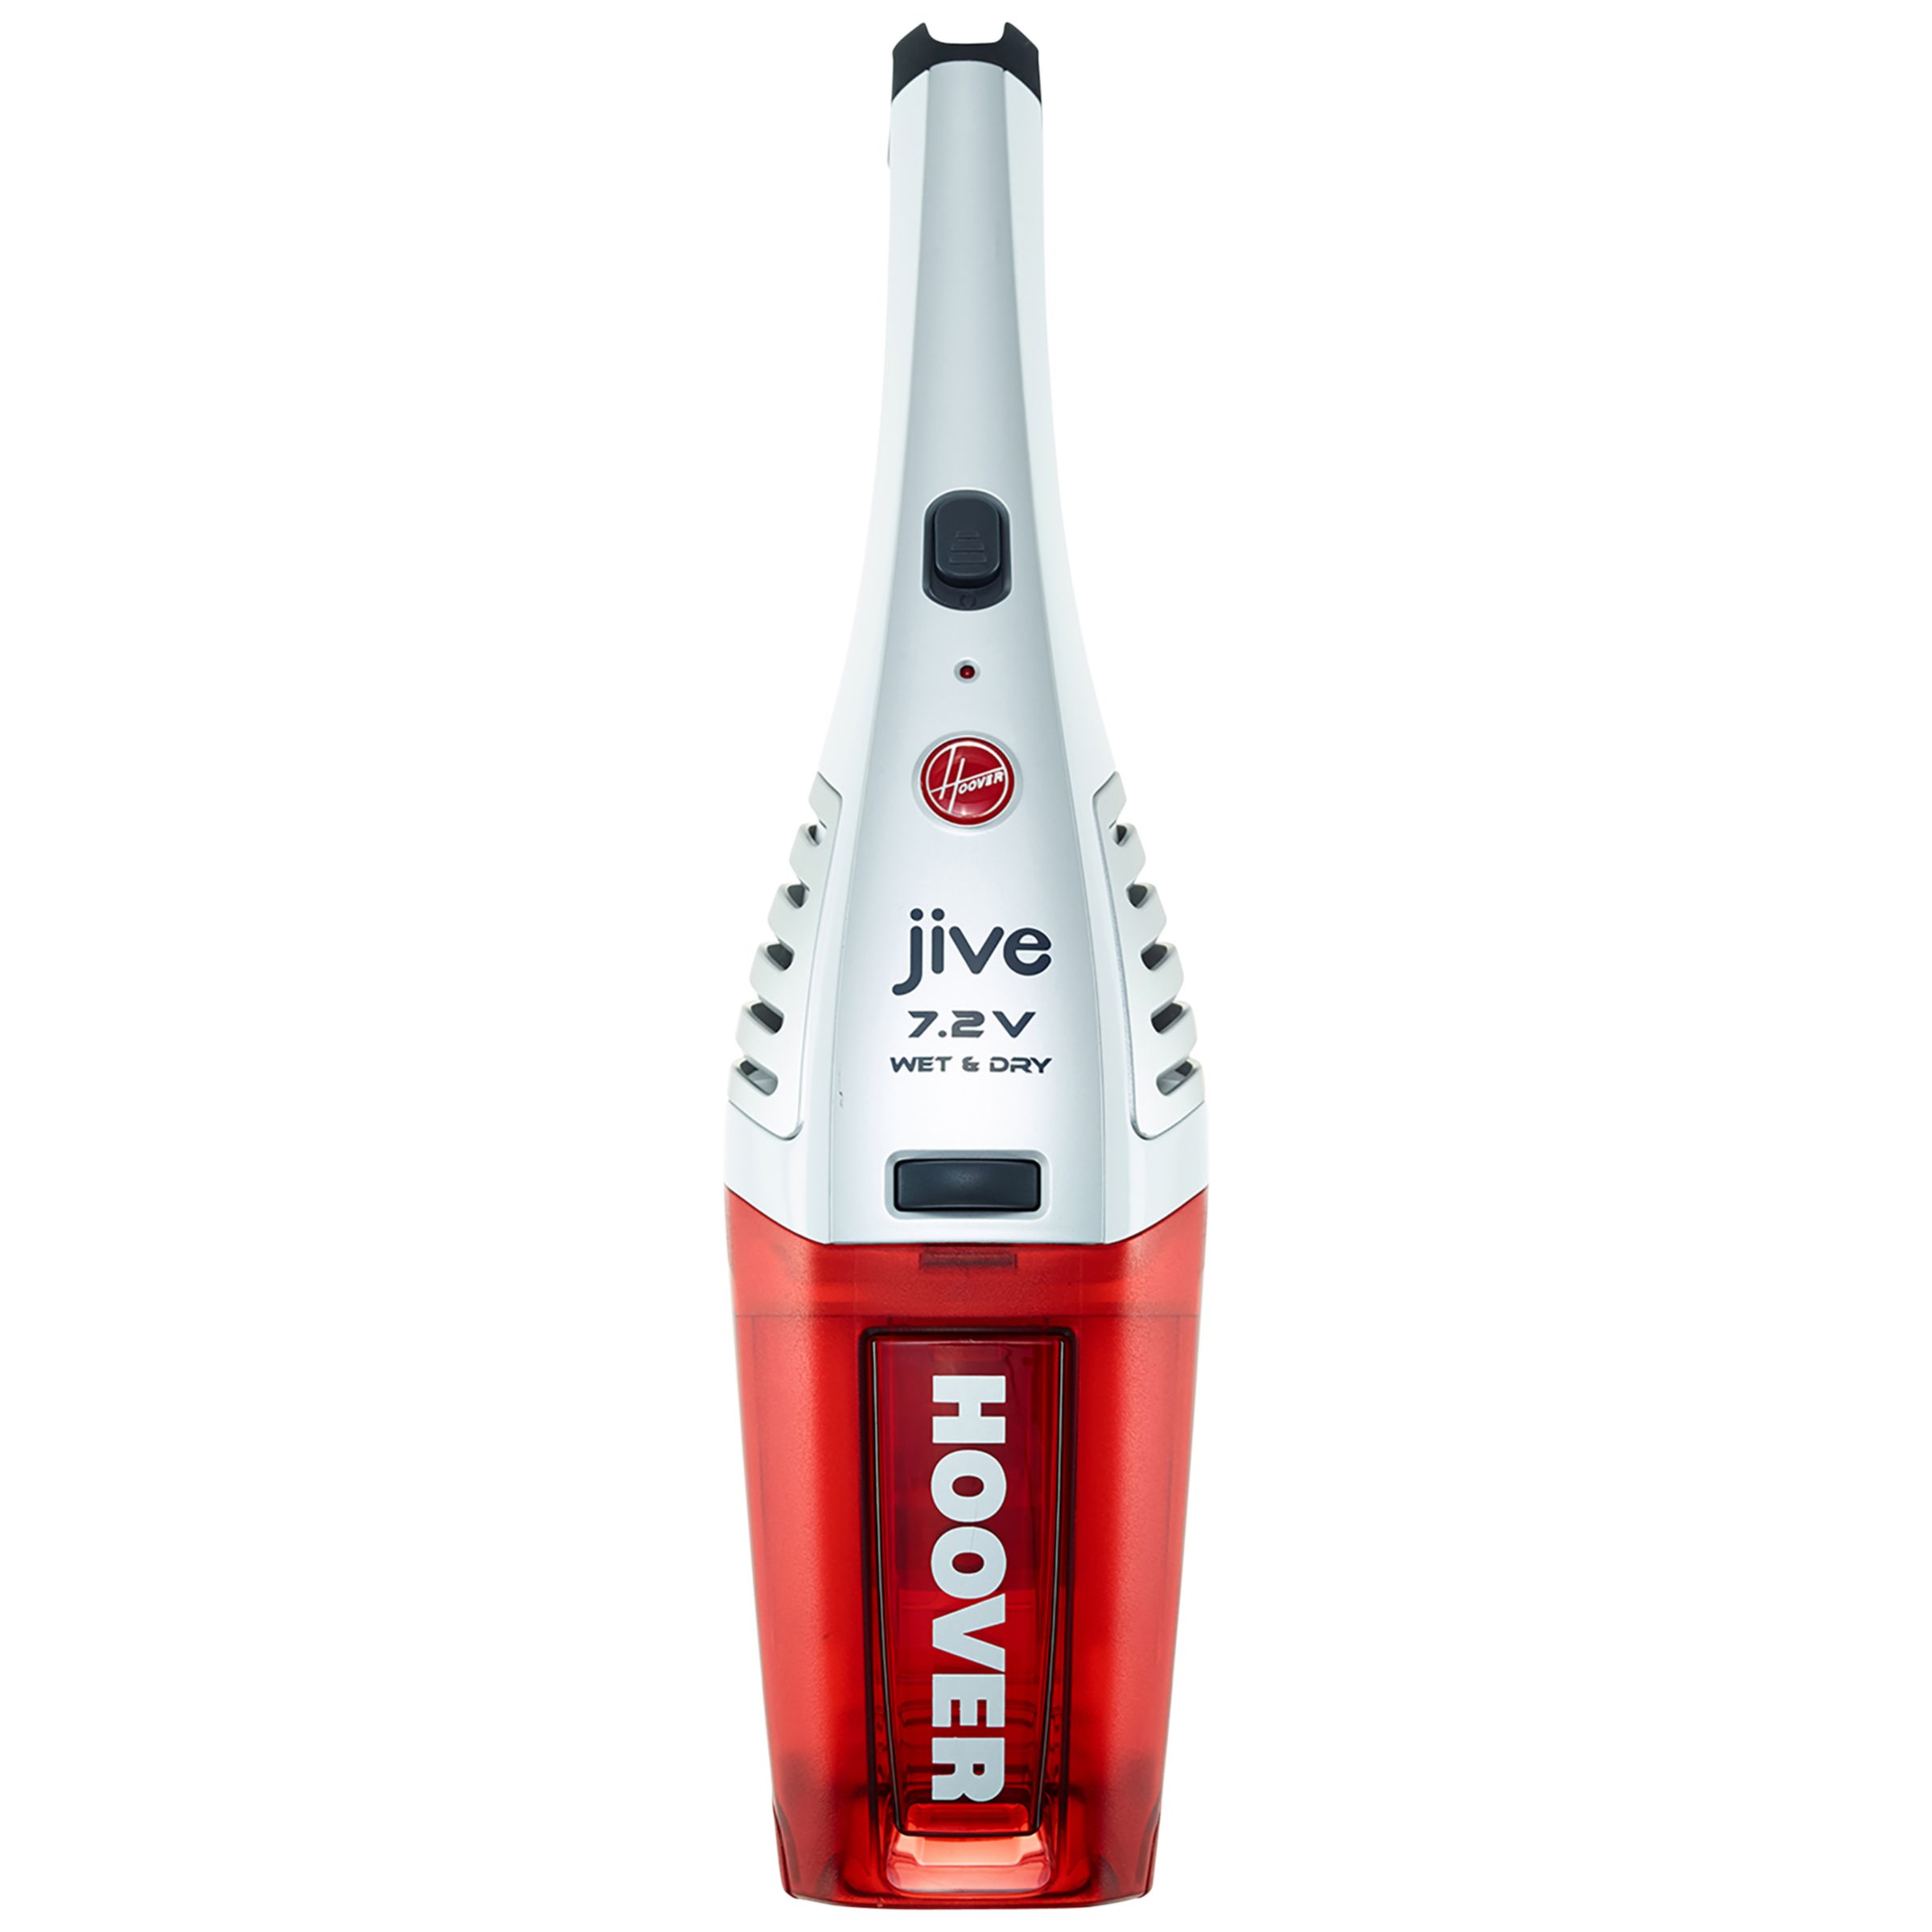 Hoover SJ72WWB6 Jive Wet & Dry 7.2V Cordless Handheld Vacuum Cleaner, Red